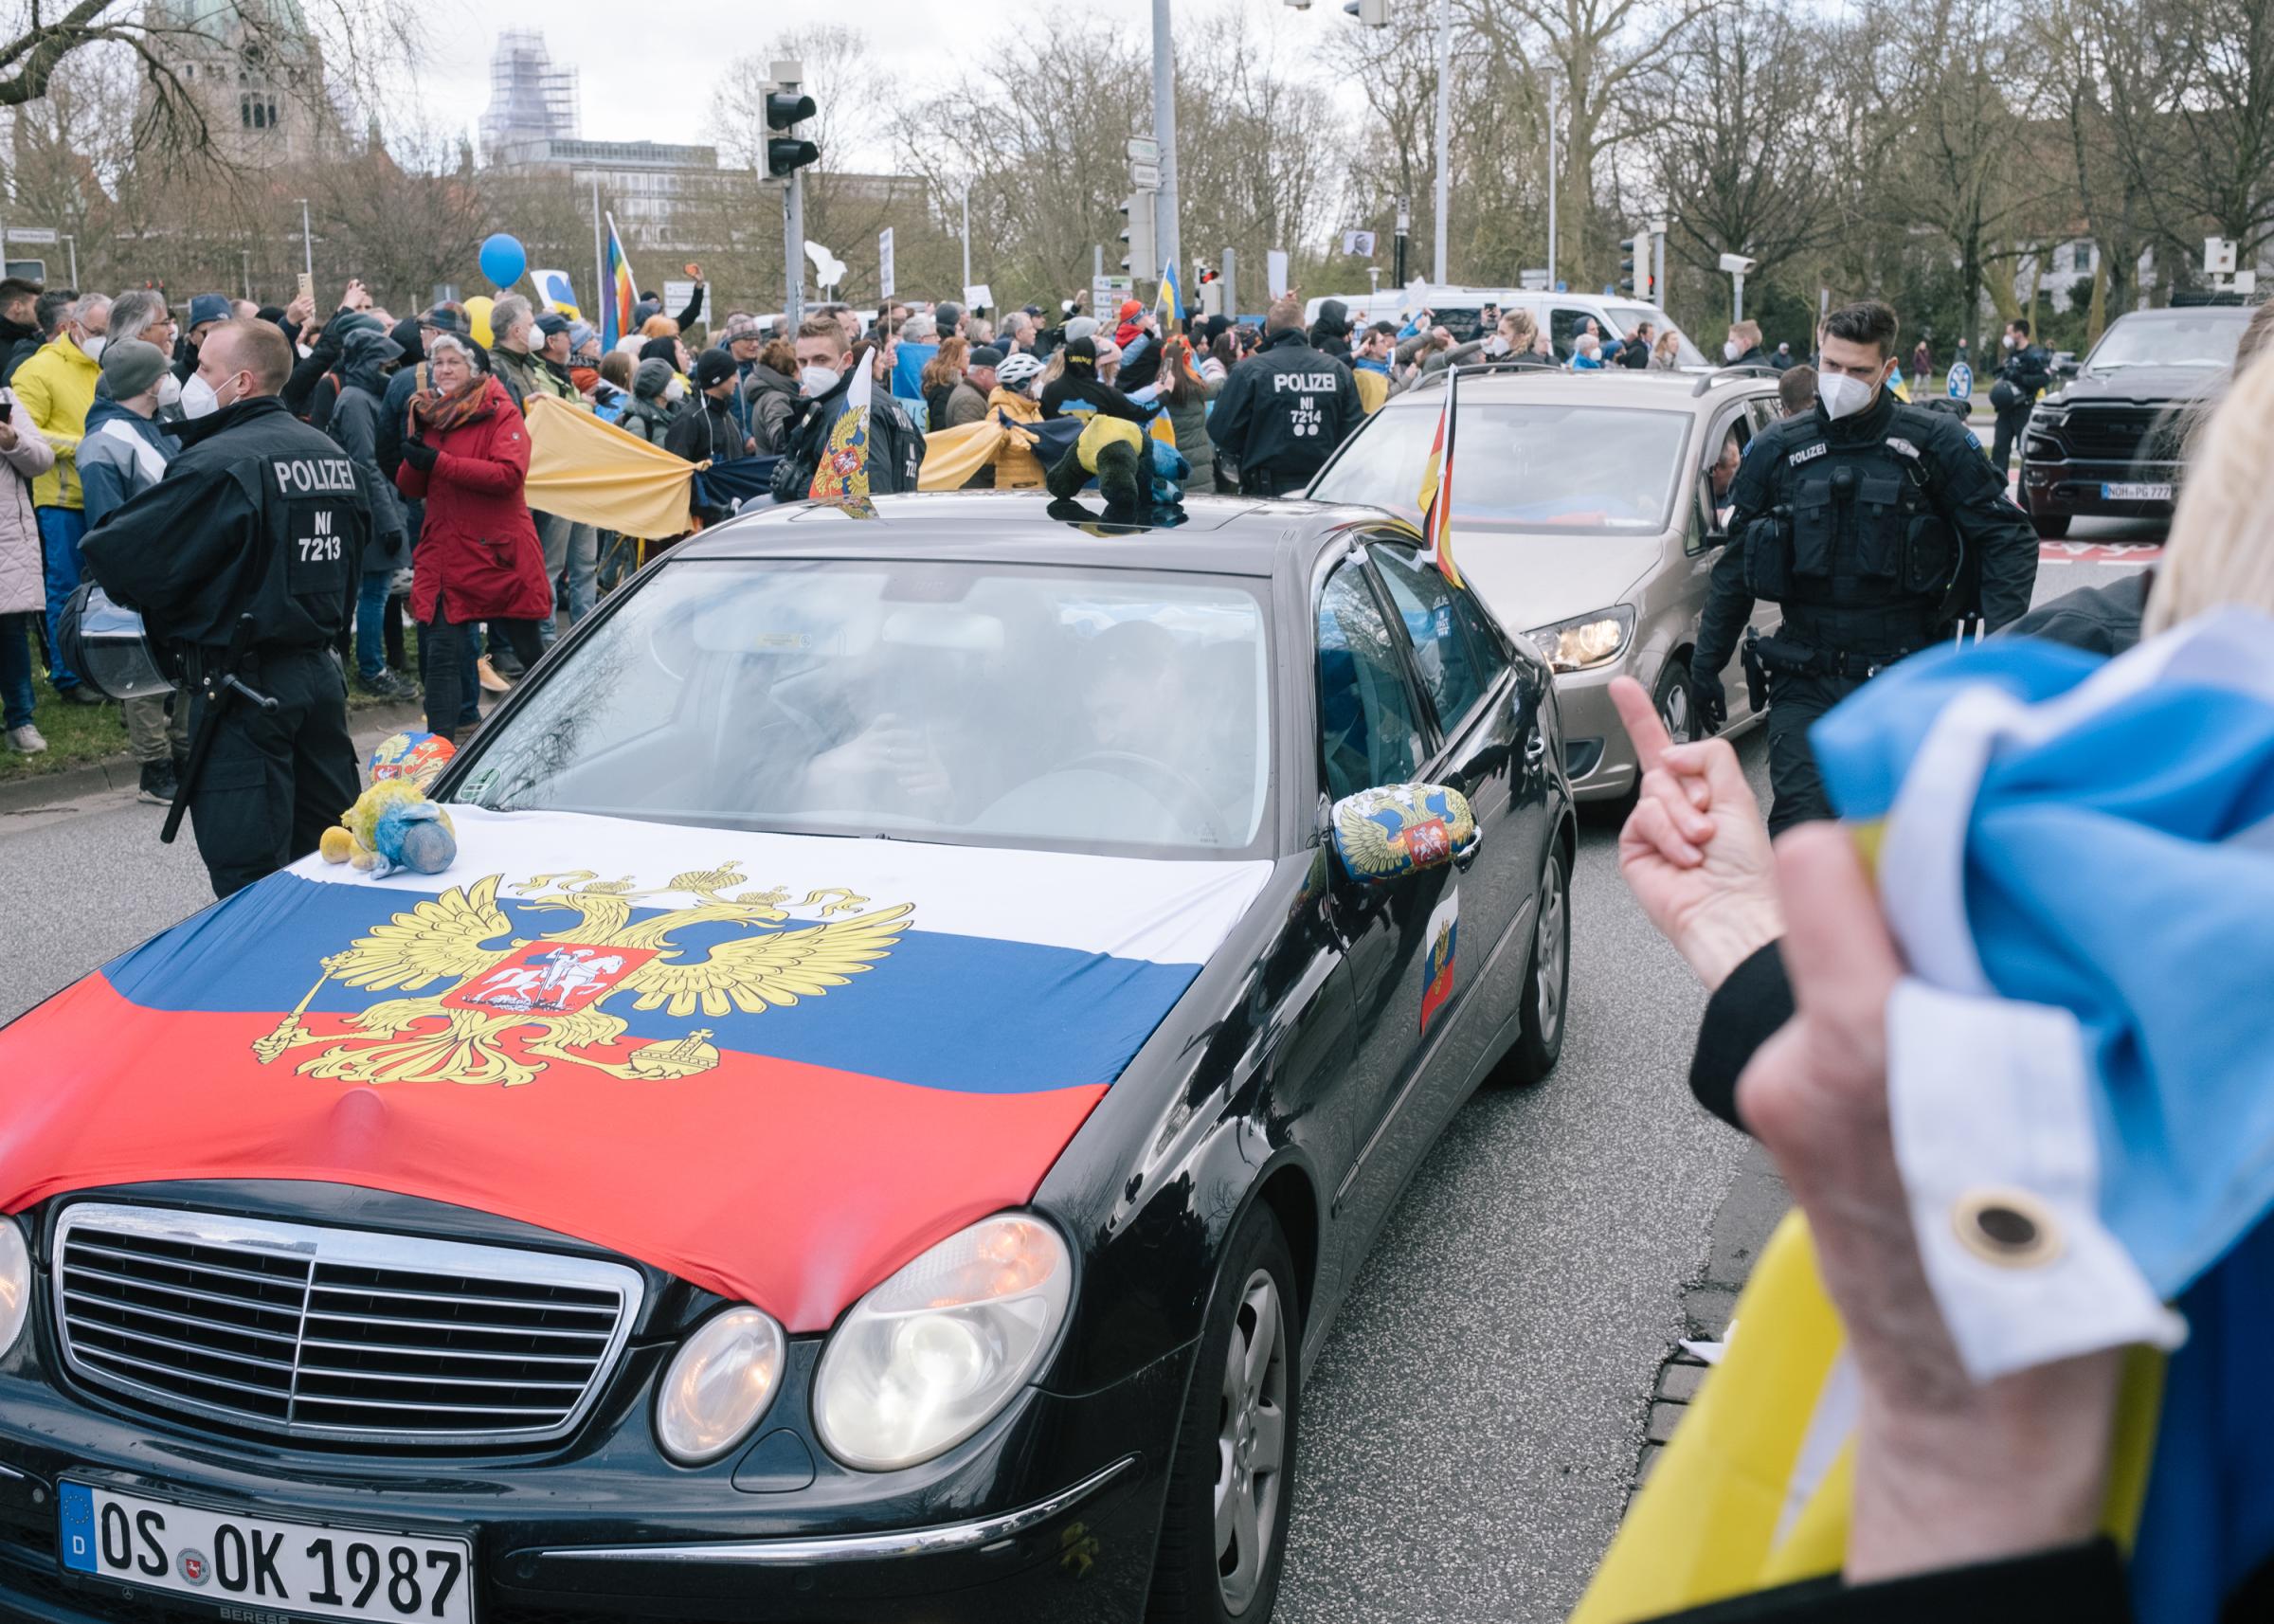 Russian Motorcade in Hanover Blocked